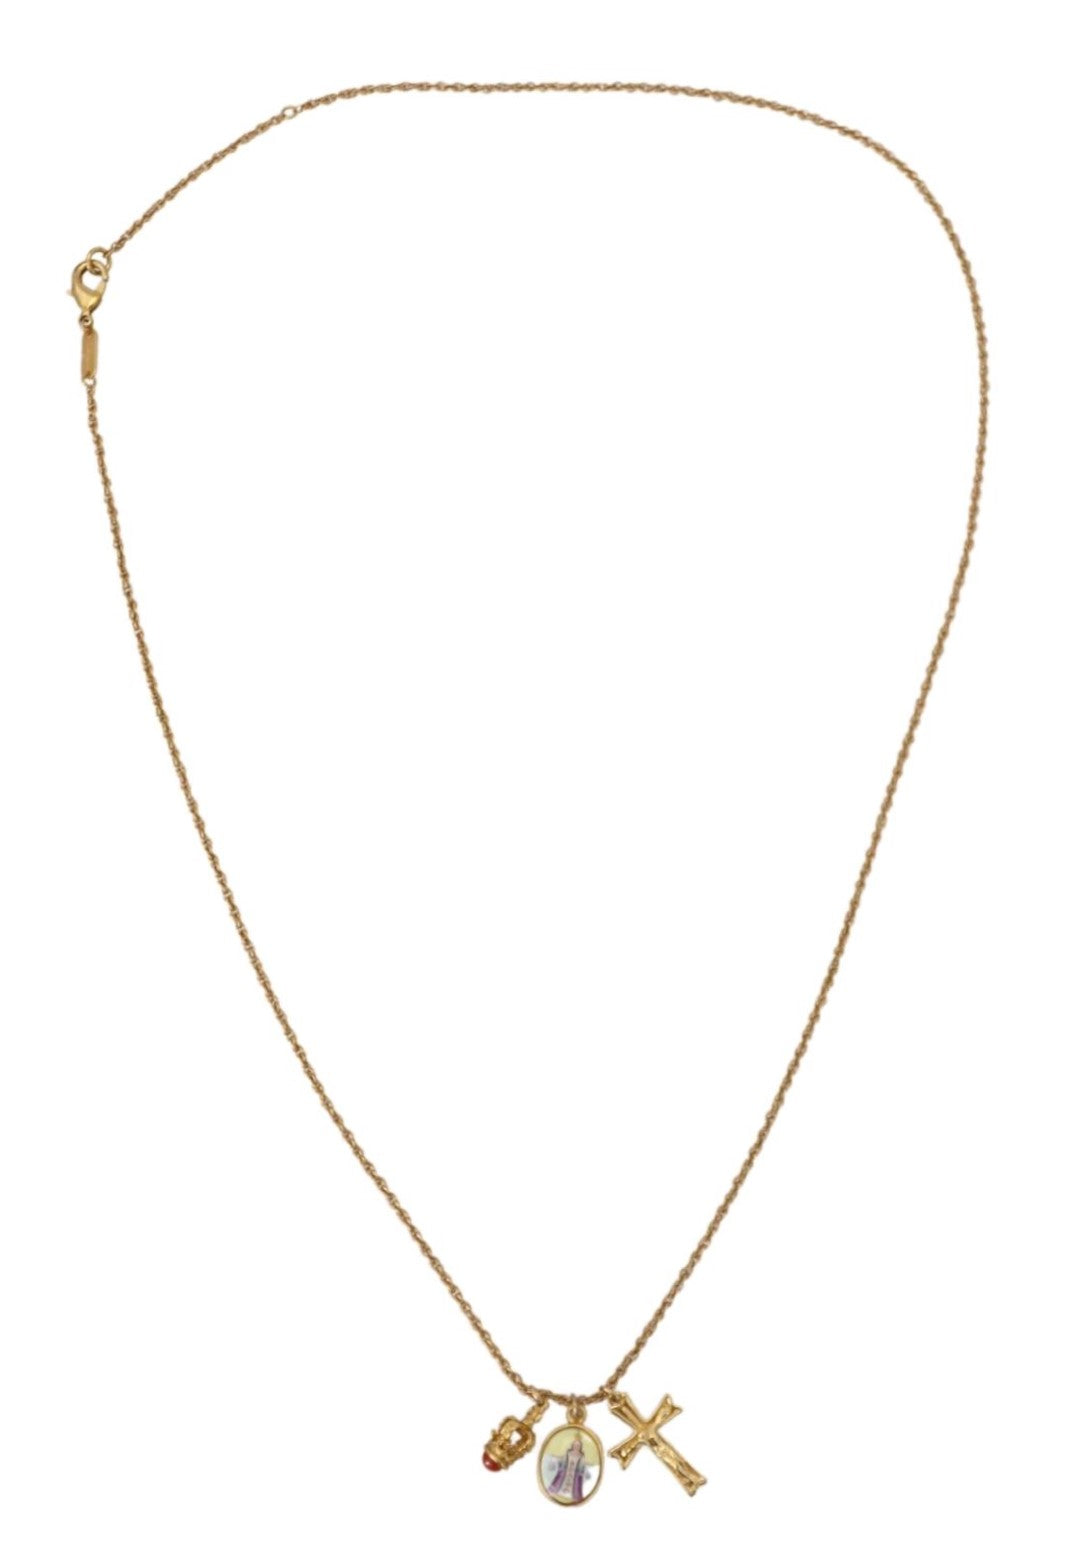 Dolce & Gabbana Elegant Gold Tone Charm Necklace with Cross Pendant